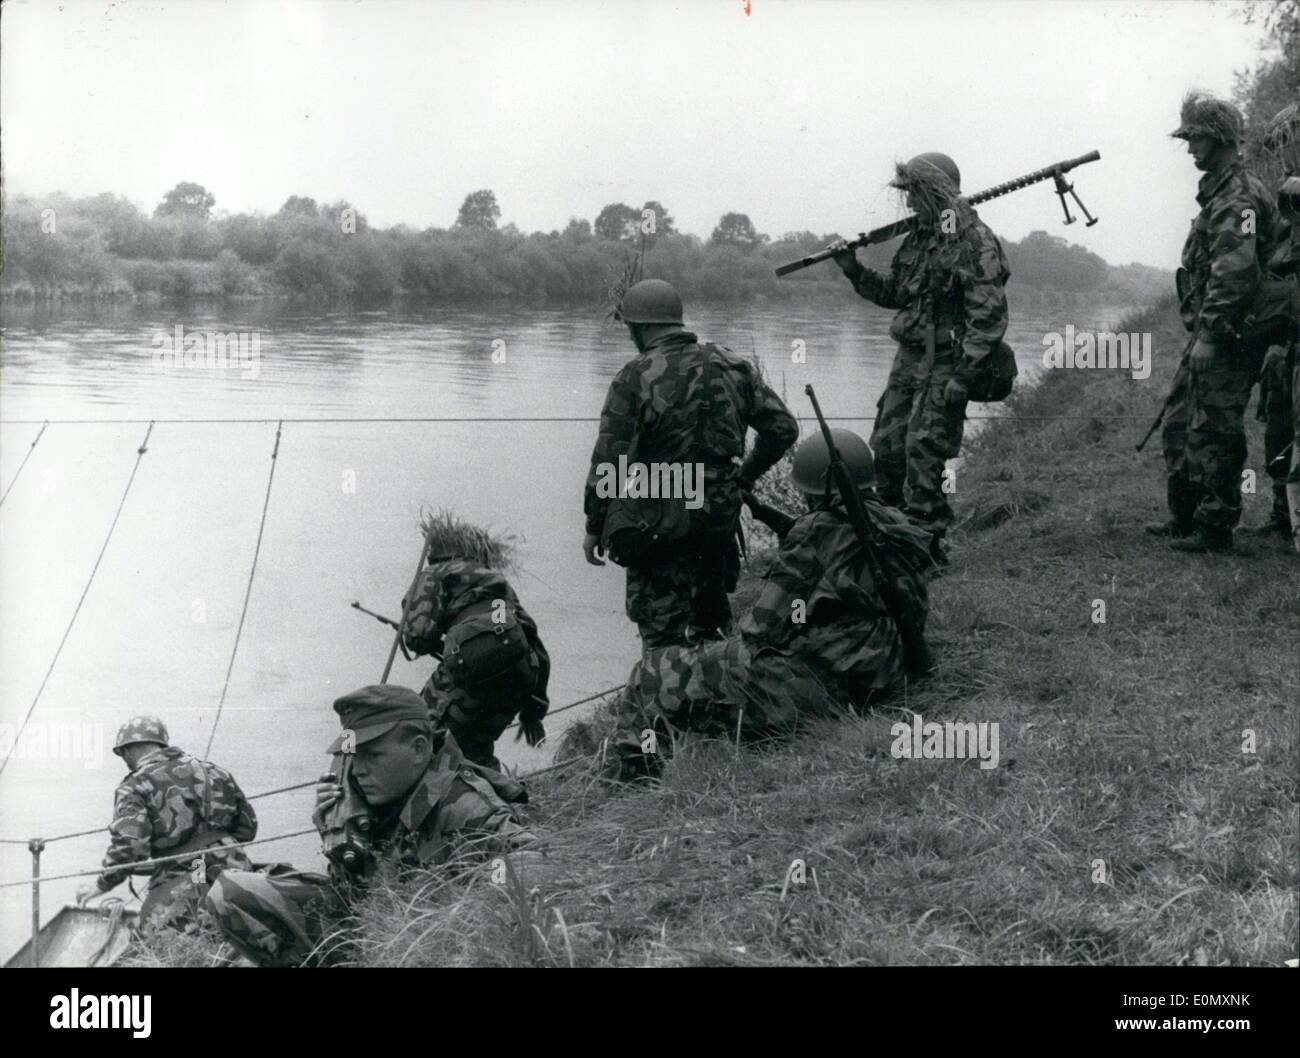 Oct. 30, 1956 - The Munich Pioneers Teaching Battalion laid a pontoon bridge across the Donau near Ingolstadt. It was the first Stock Photo